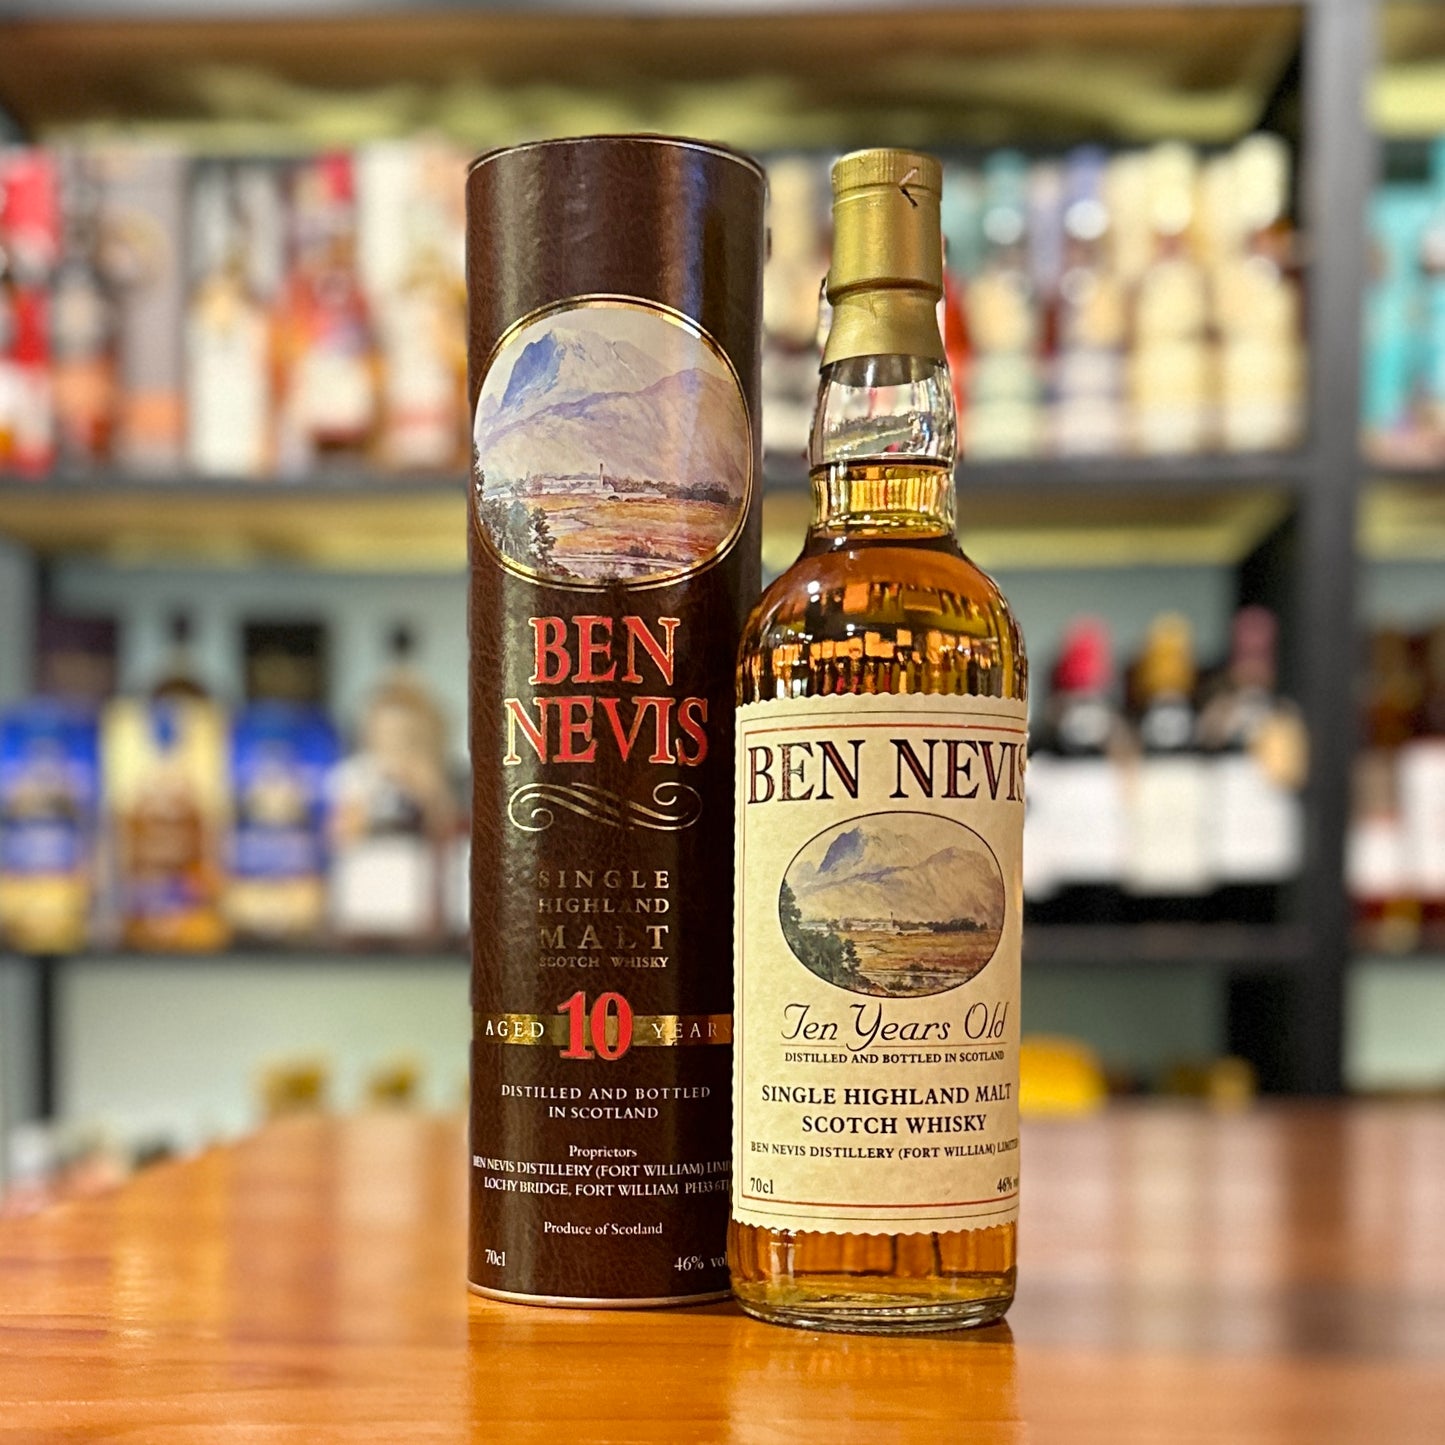 Ben Nevis 10 Year Old Single Malt Scotch Whisky (Early 2000s)